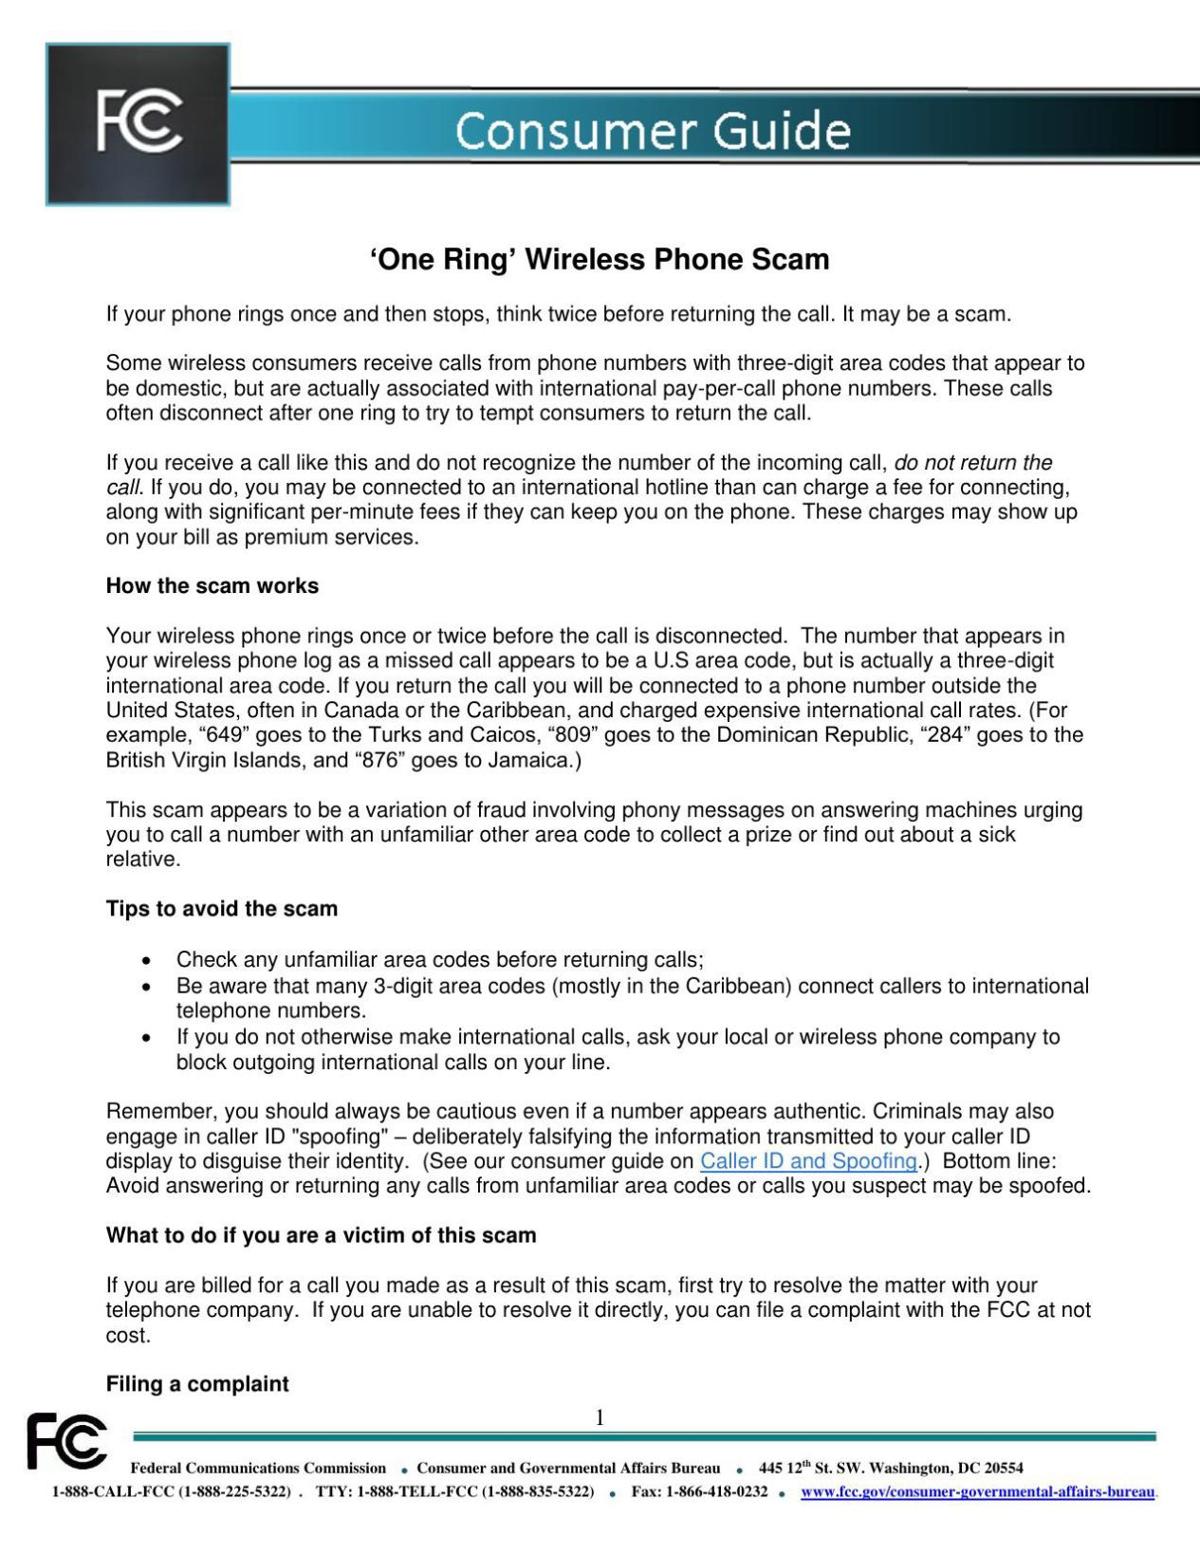 One Ring Wireless Phone Scam Regional News Montanarightnow Com